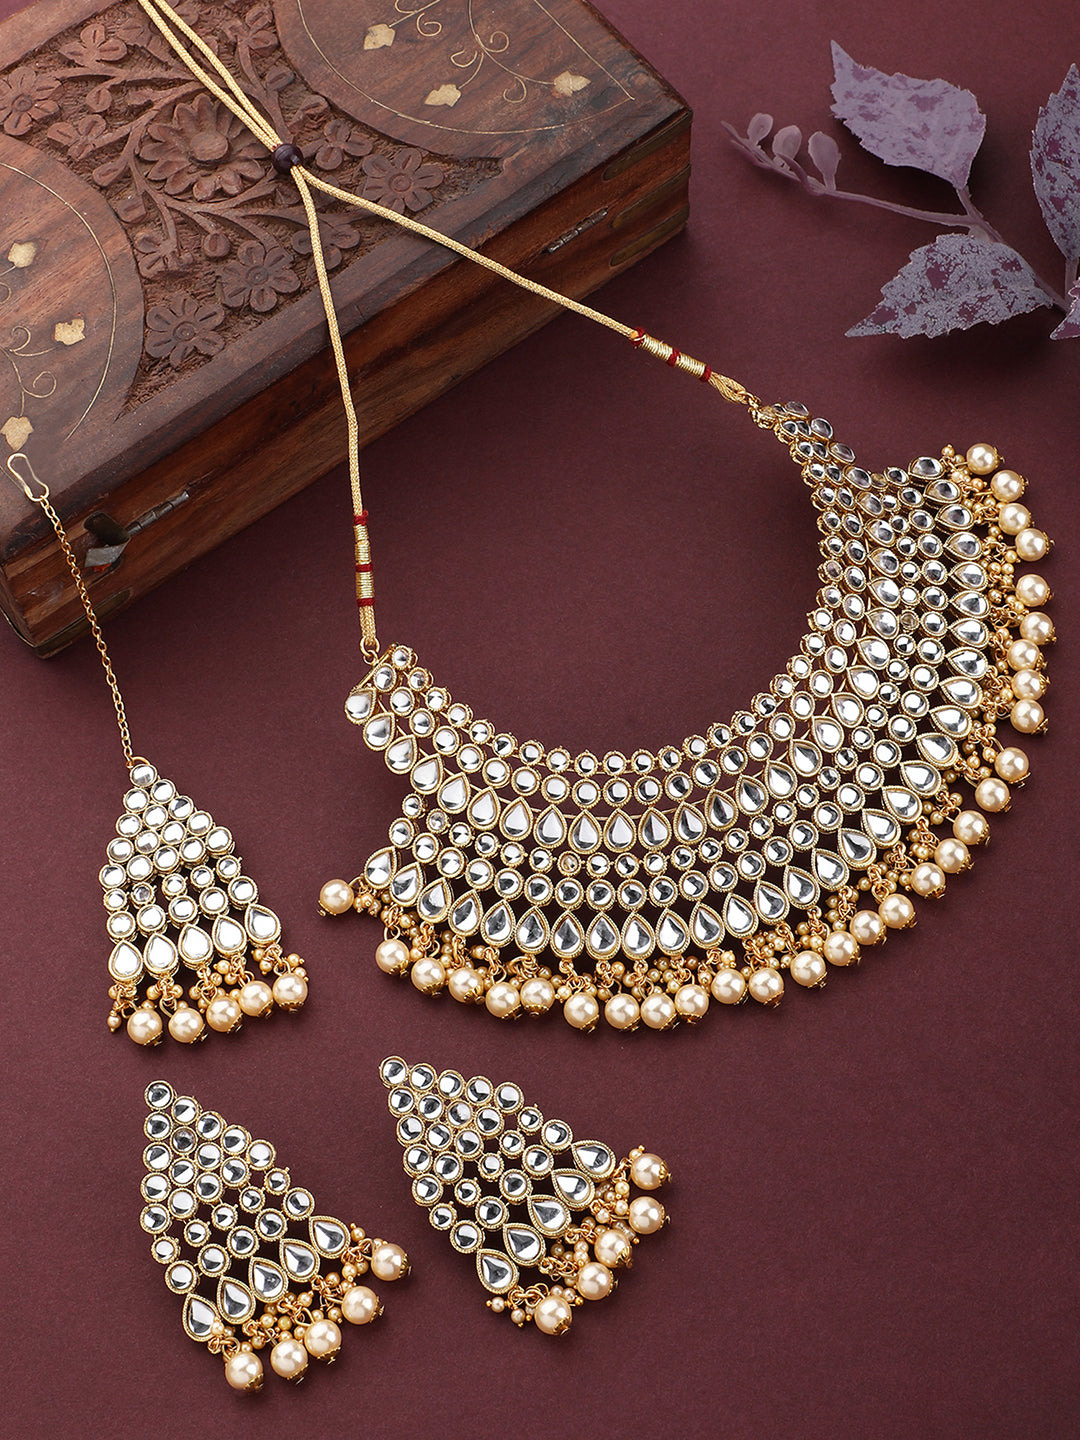 Women's Kundan Stone Gold Plated Traditional Brass Bridal Jewellery Set with Maangtika earring - Anikas Creation